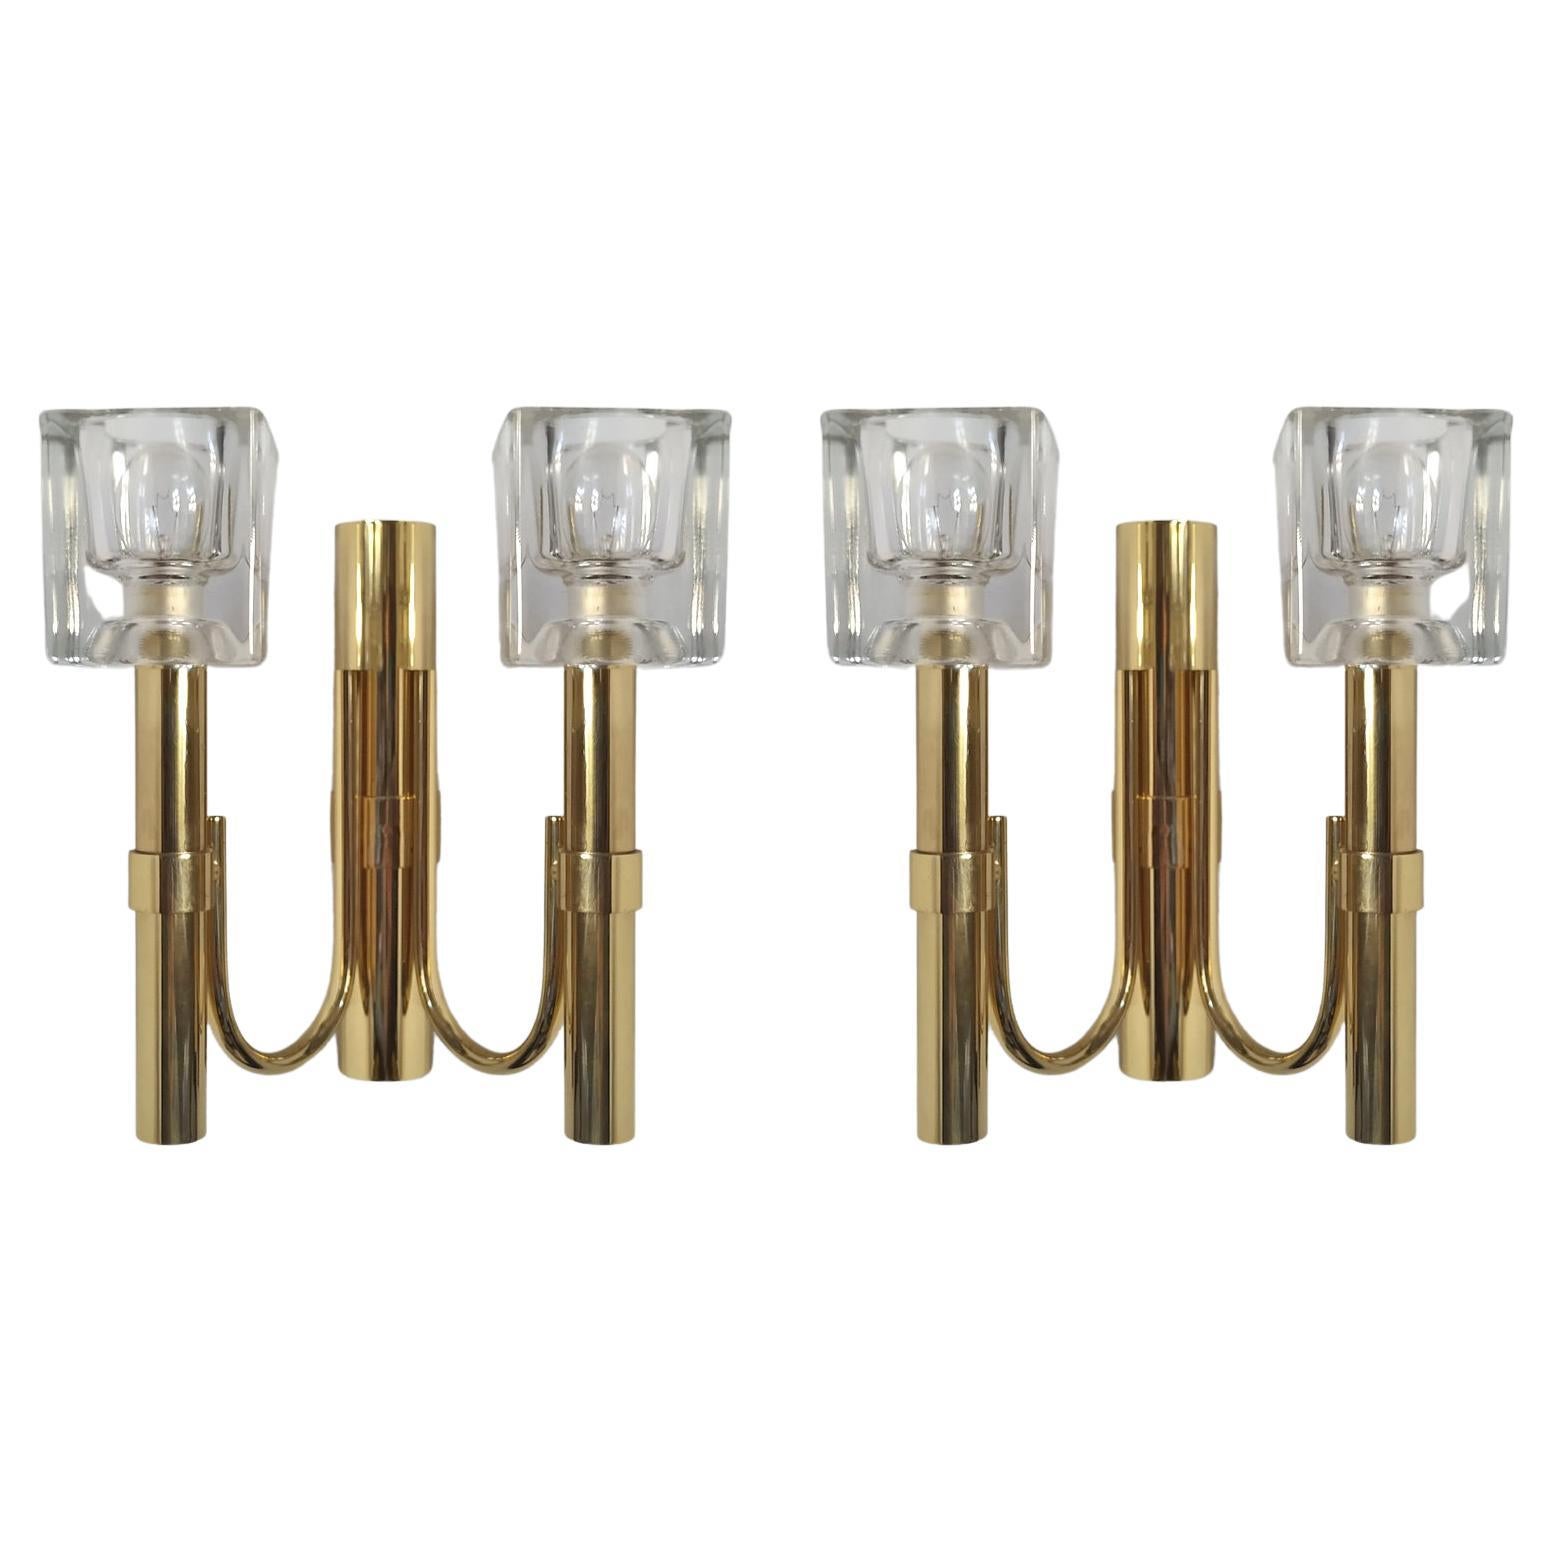 Pair of Italian Vintage Modernist Brass and Glass Sciolari Wall Lights Sconces